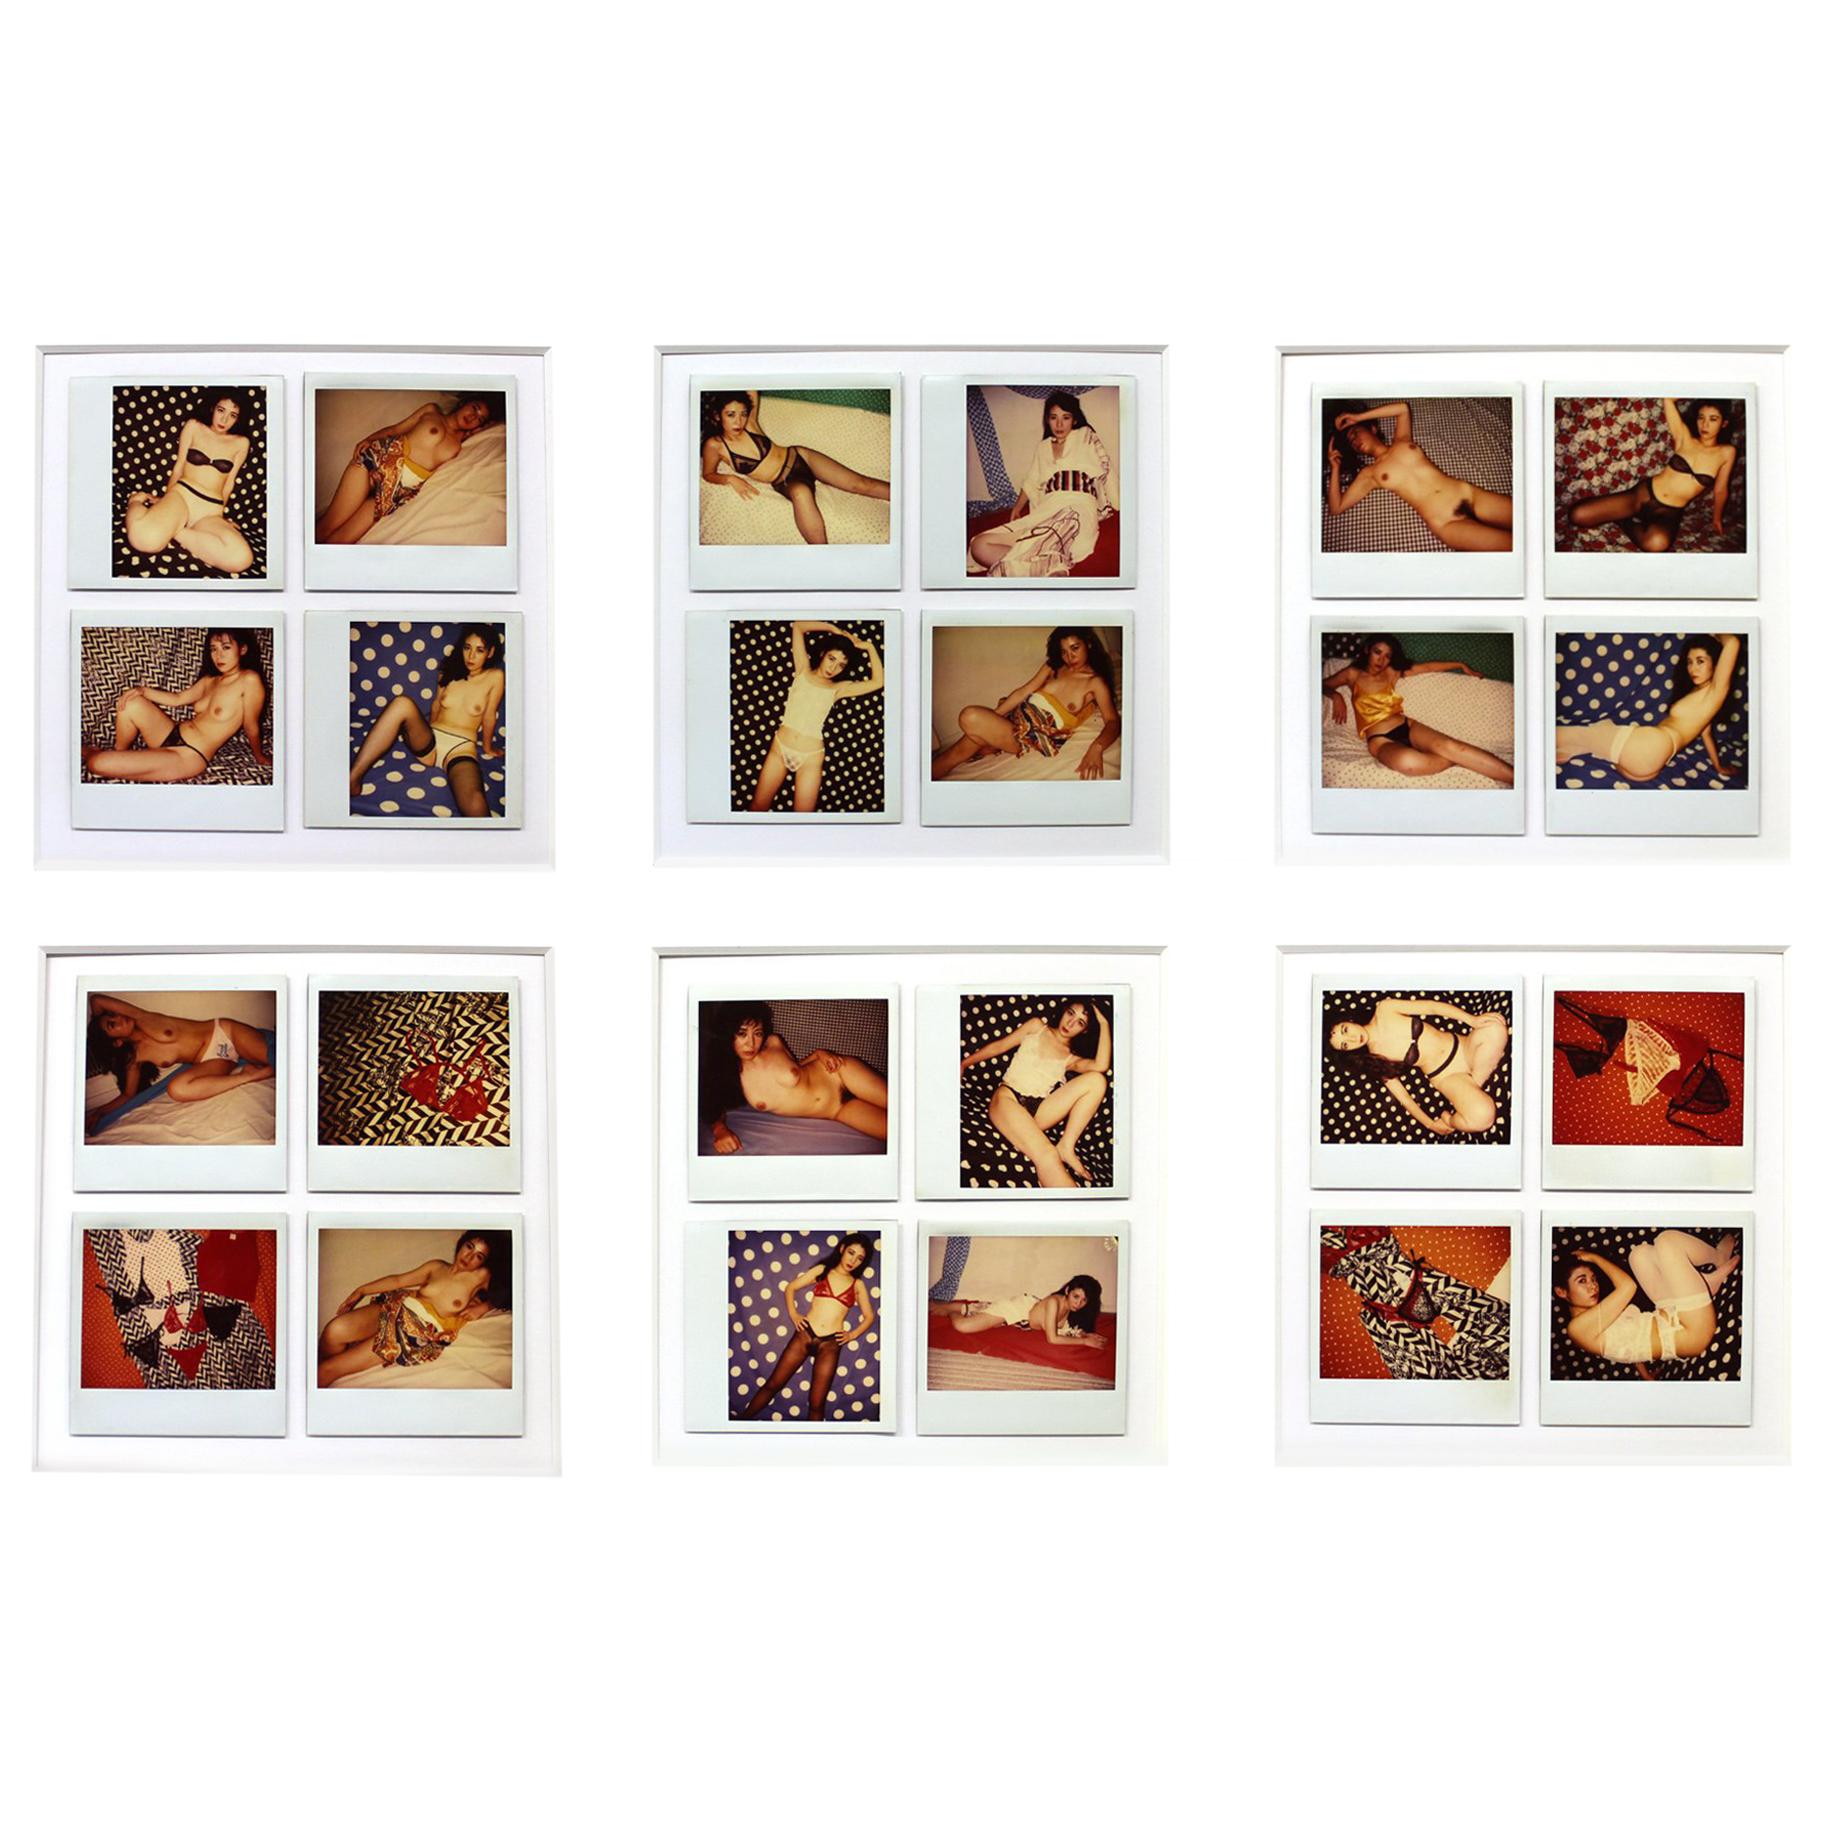 Japanese Vernacular Erotic Nude Polaroids in the Style of Nobuyoshi Araki 11